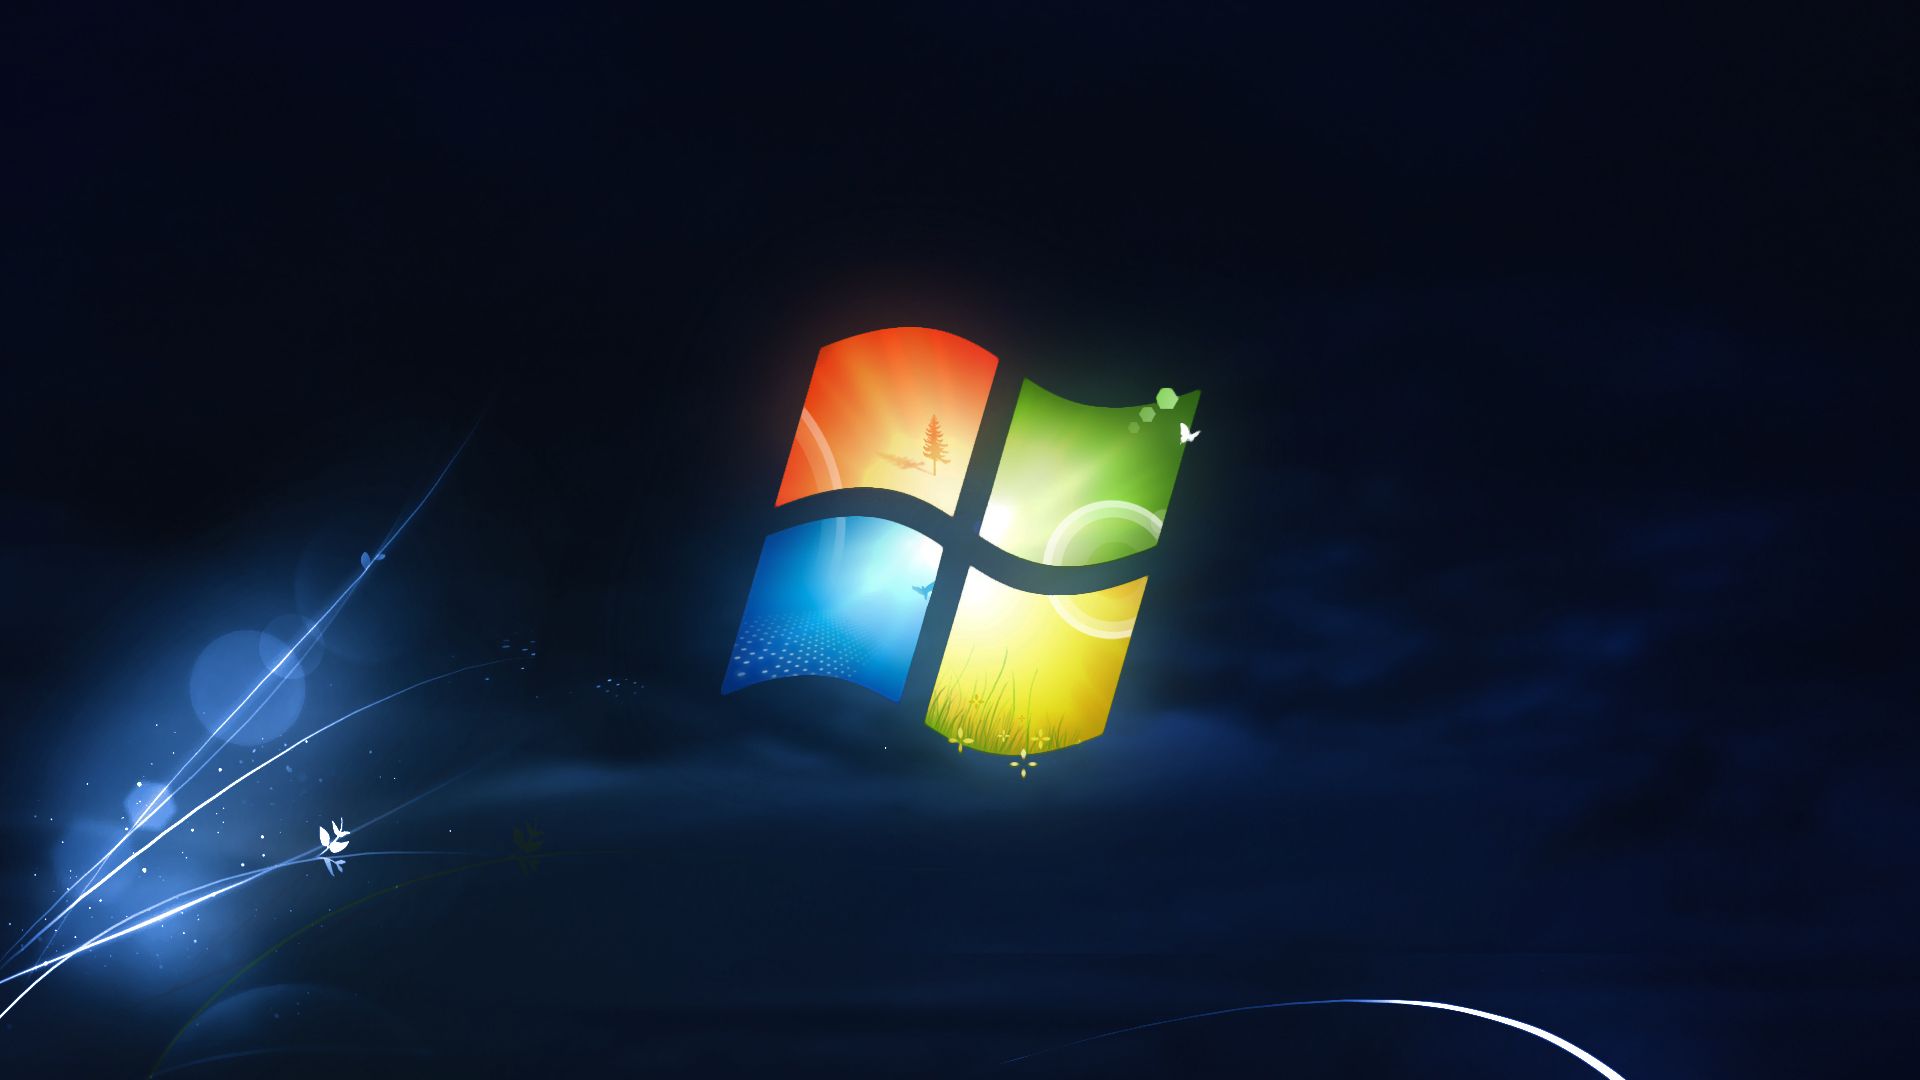 Microsoft HD Backgrounds